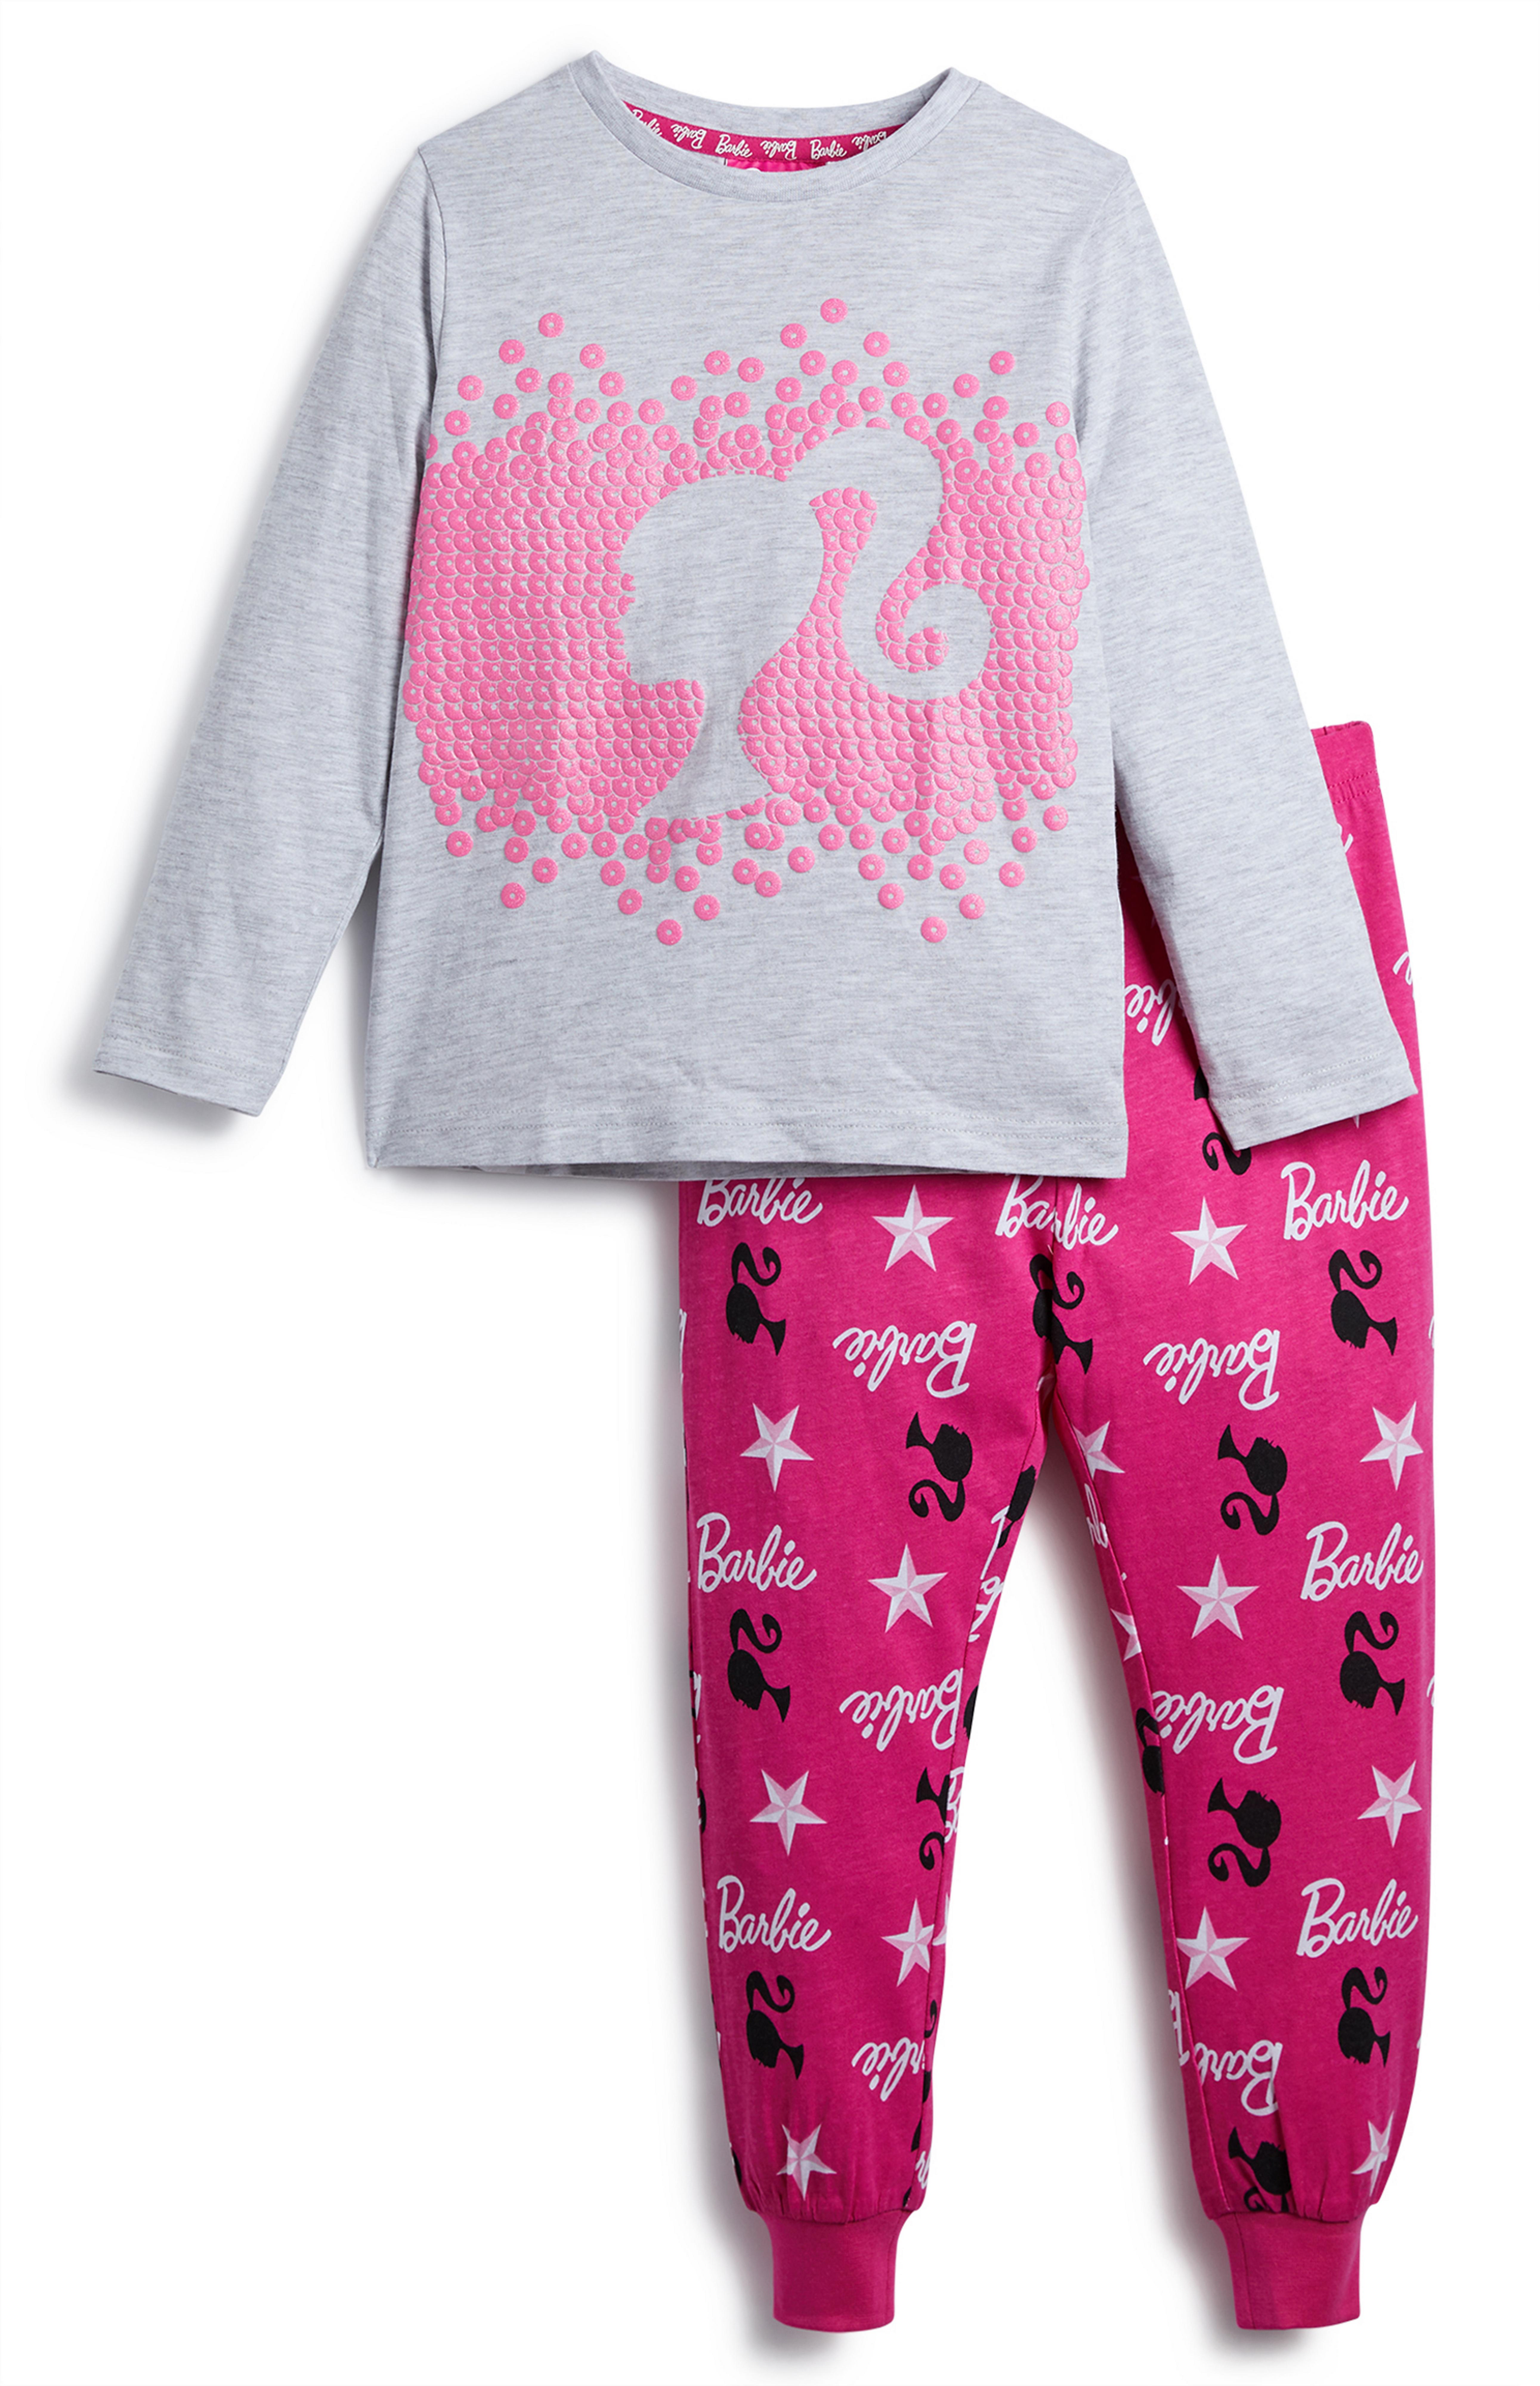 Younger Girl Barbie Pink And Grey Pyjamas Set Kids Pyjamas Boys Clothes Kids Clothes All Primark Products Primark Uk